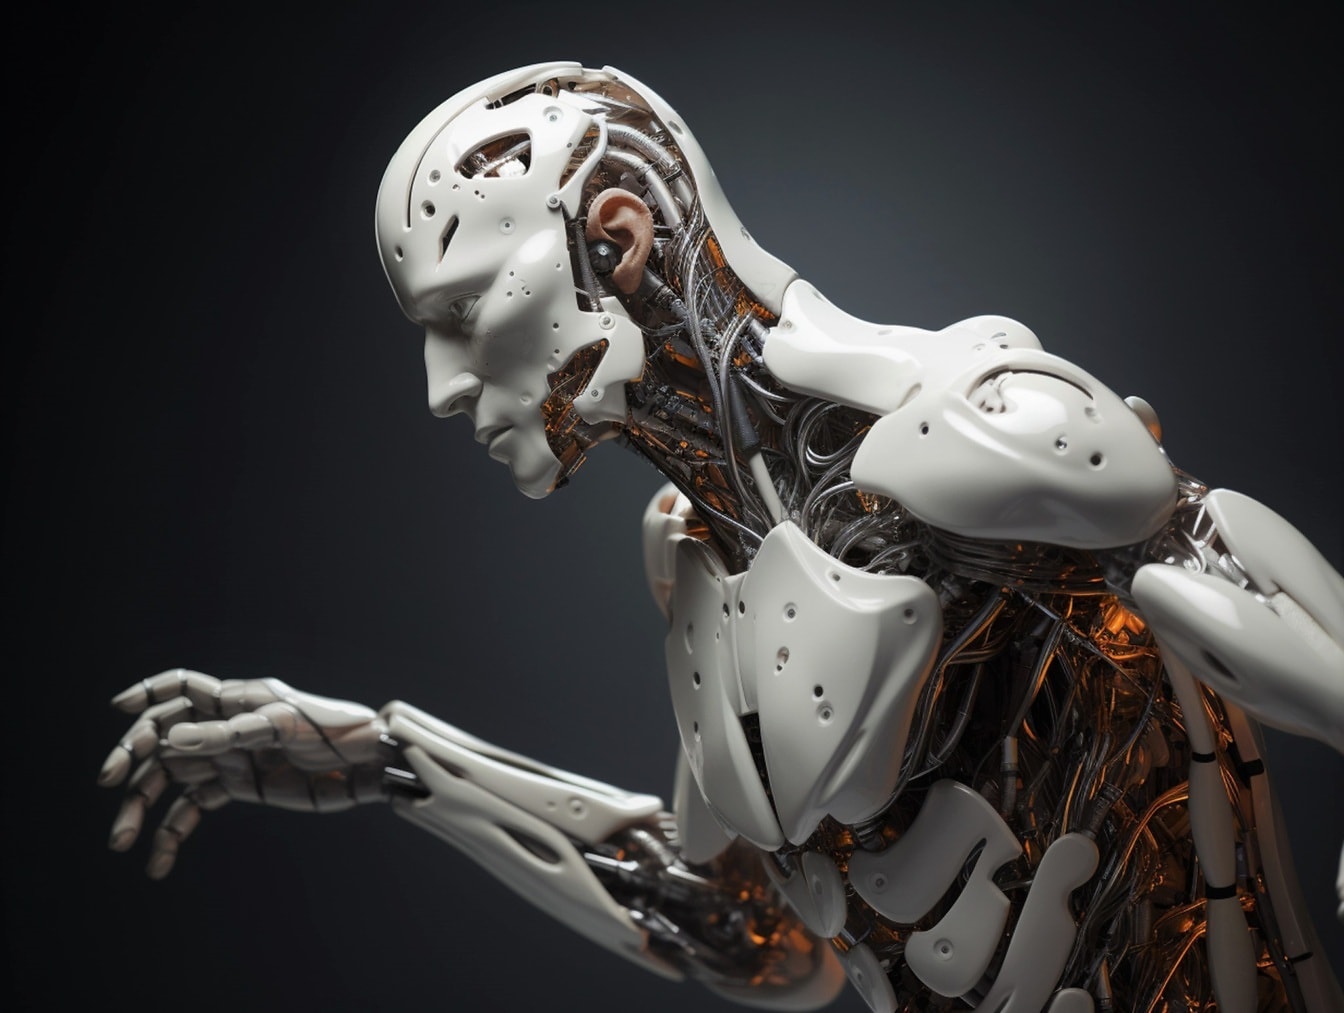 Hvid humanoid cyborgrobot med kunstig intelligens